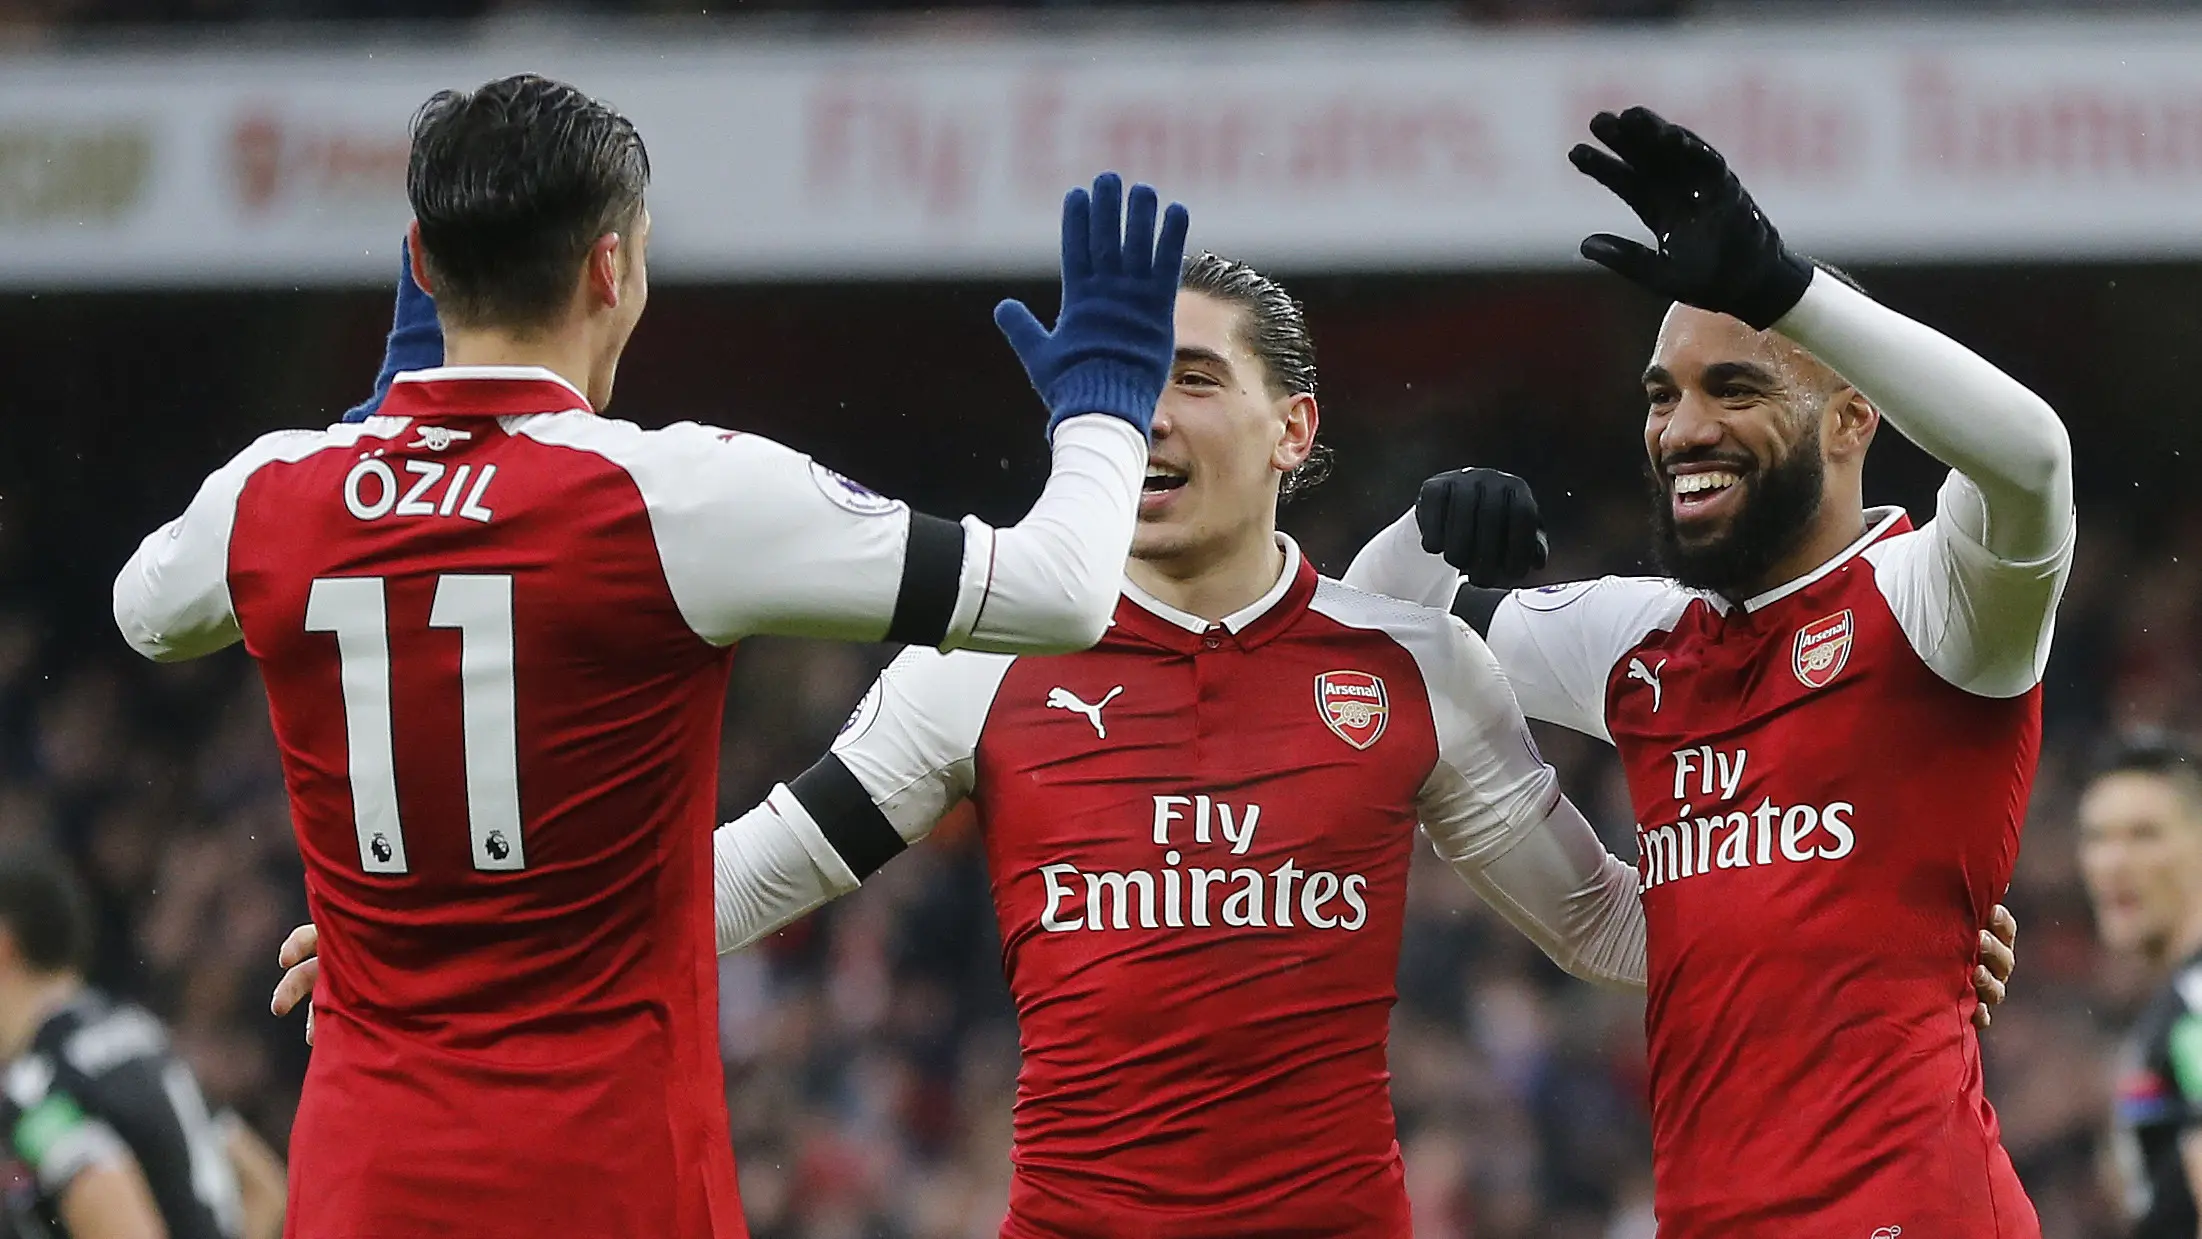 Para pemain Arsenal merayakan gol Alexandre Lacazette pada lanjutan Premier League di Emirates stadium, London, (20/1/2018). Arsenal menang 4-1. (AP/Frank Augstein)